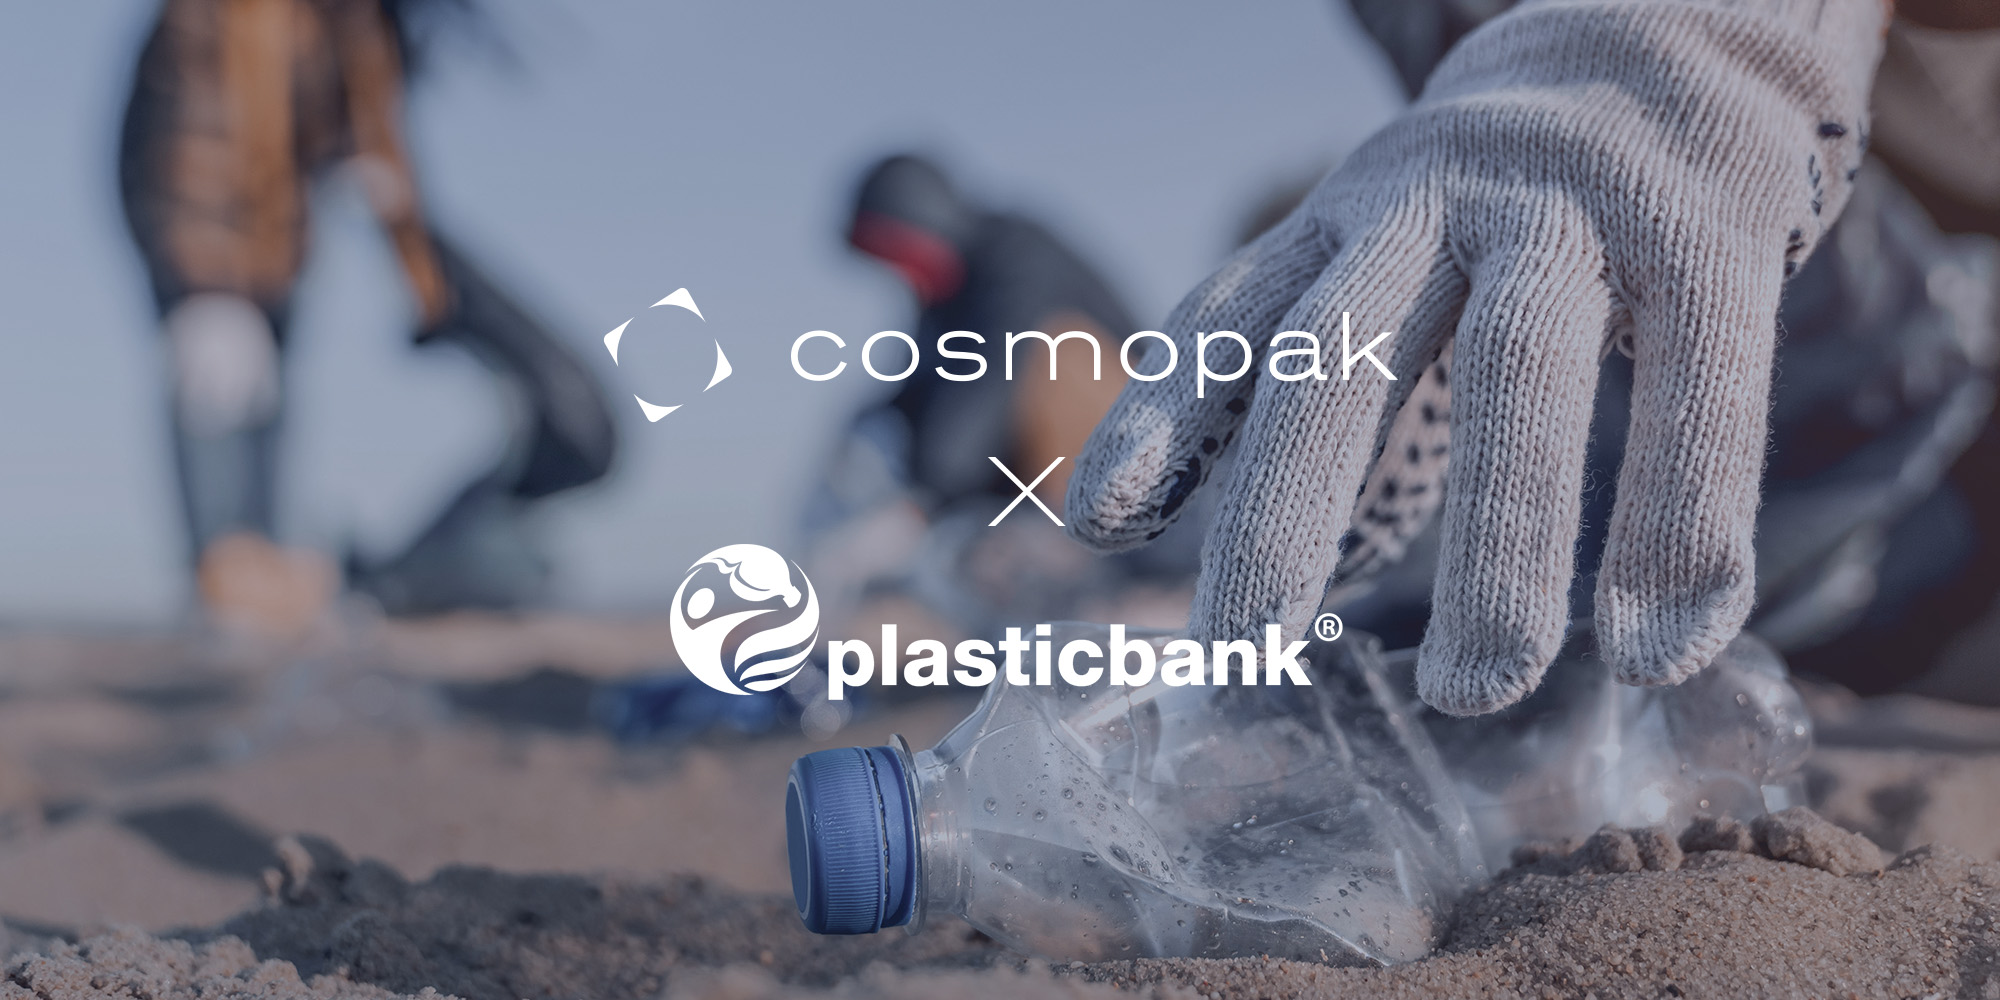 cosmopak partners with plastic bank